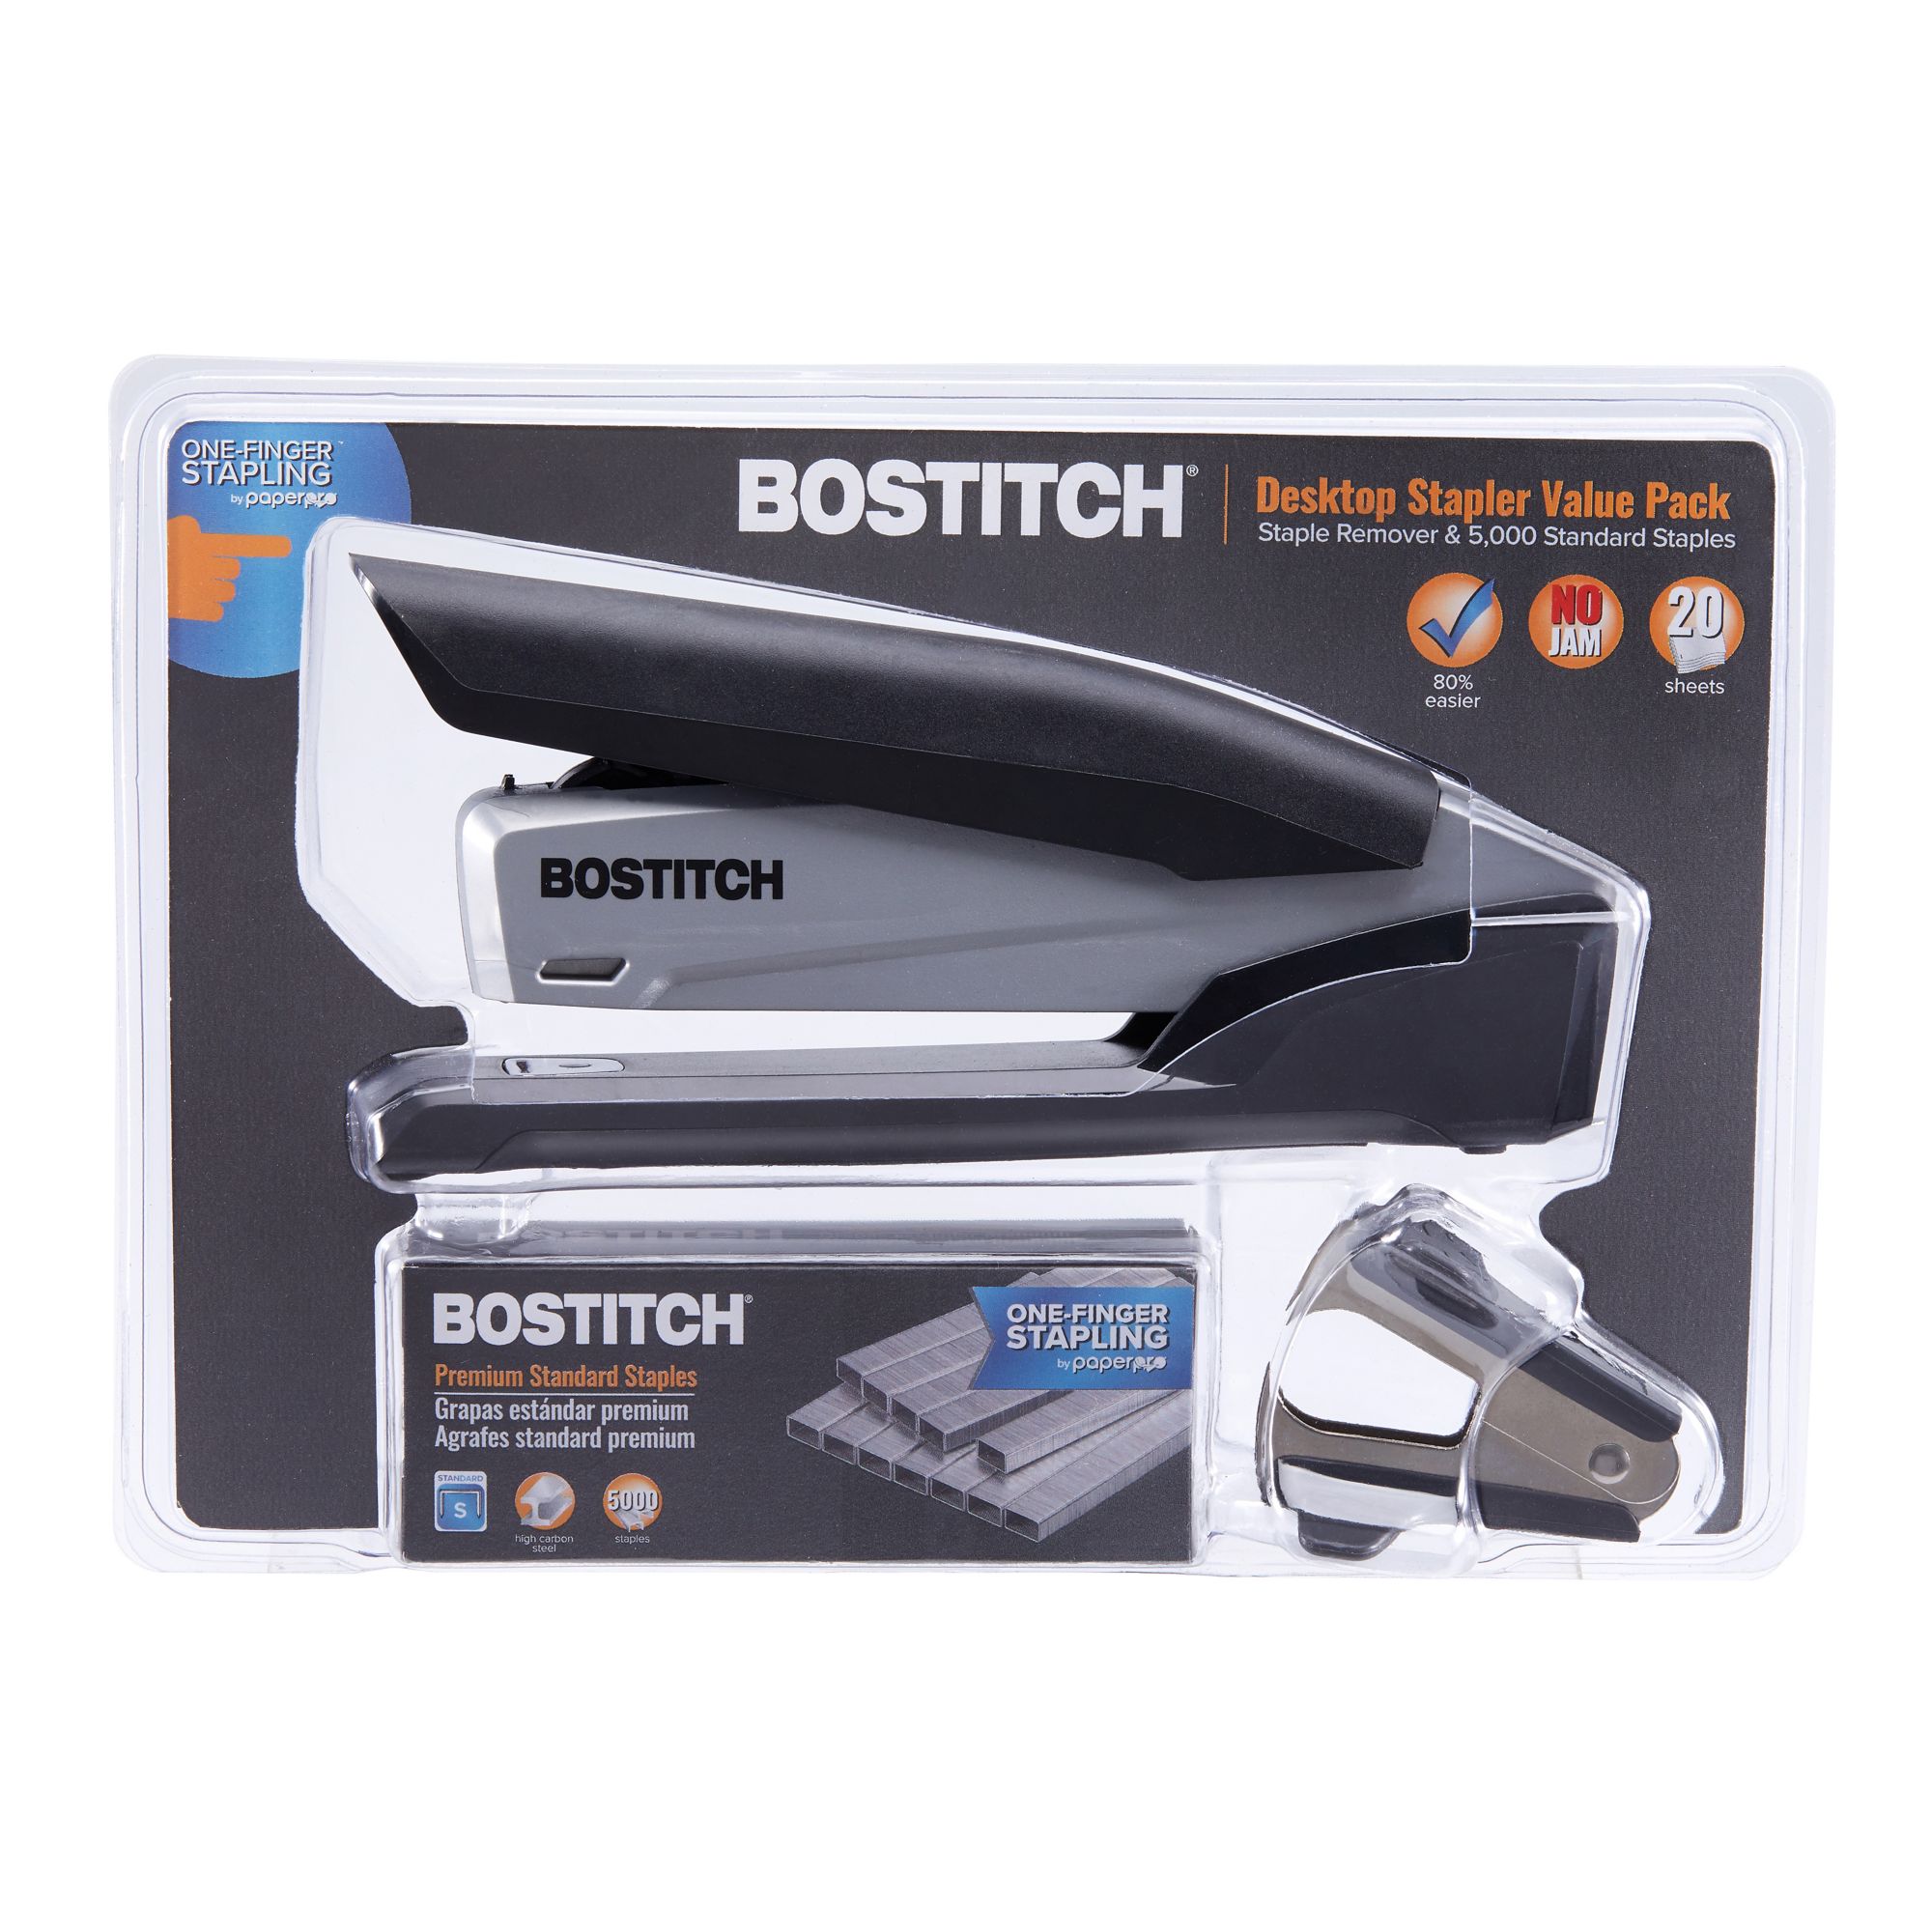 Bostitch Desktop Stapler Value Pack with Staples and Stapler Remover